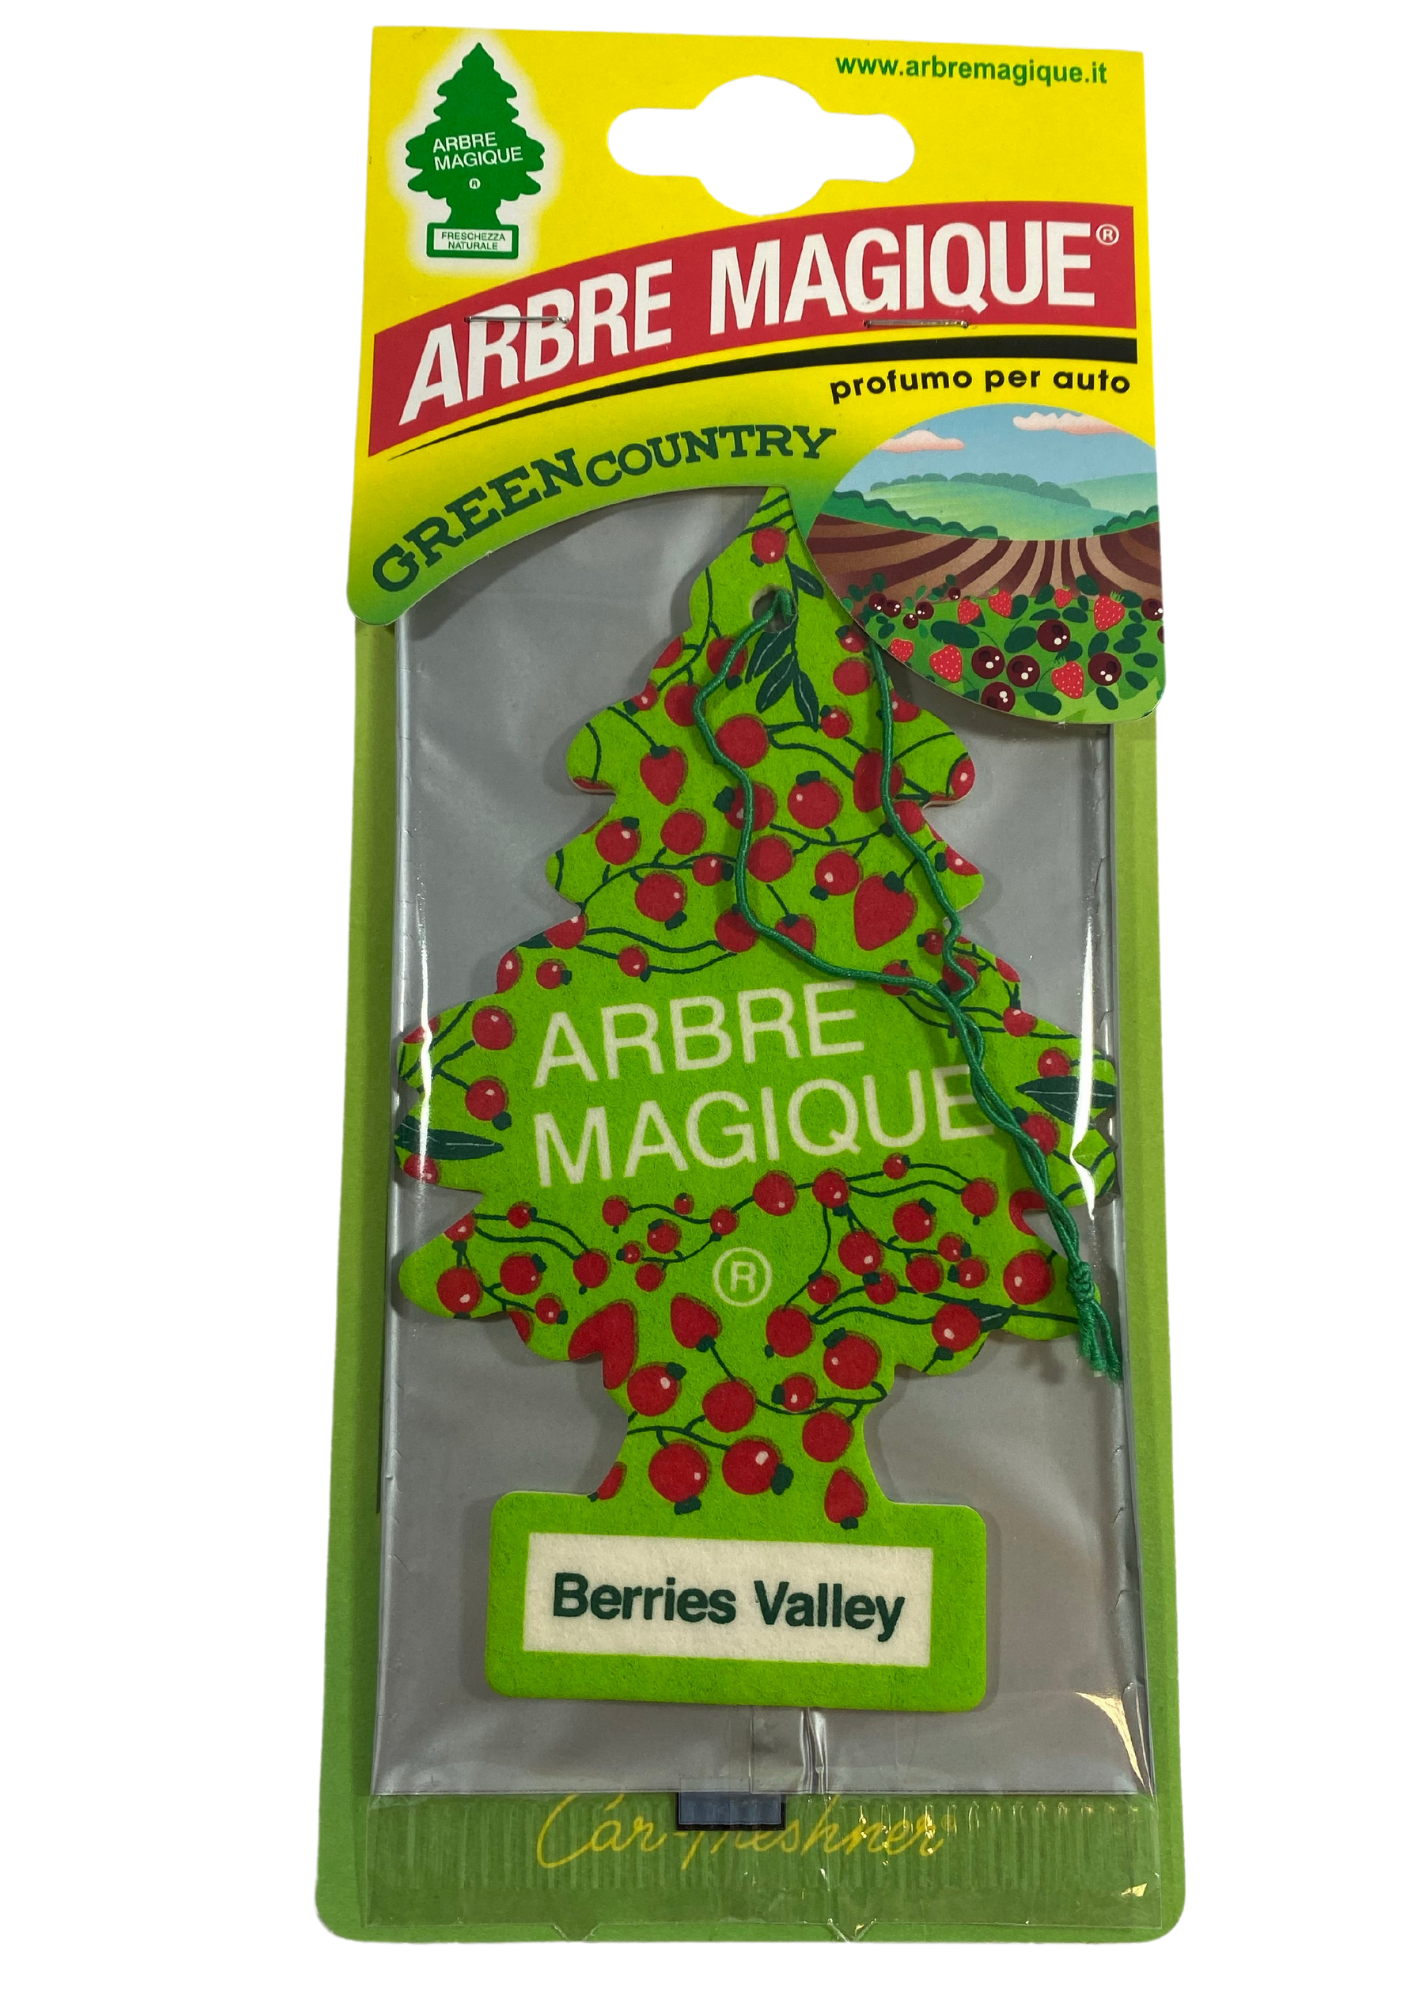 Arbre magique profumo per auto berries valley